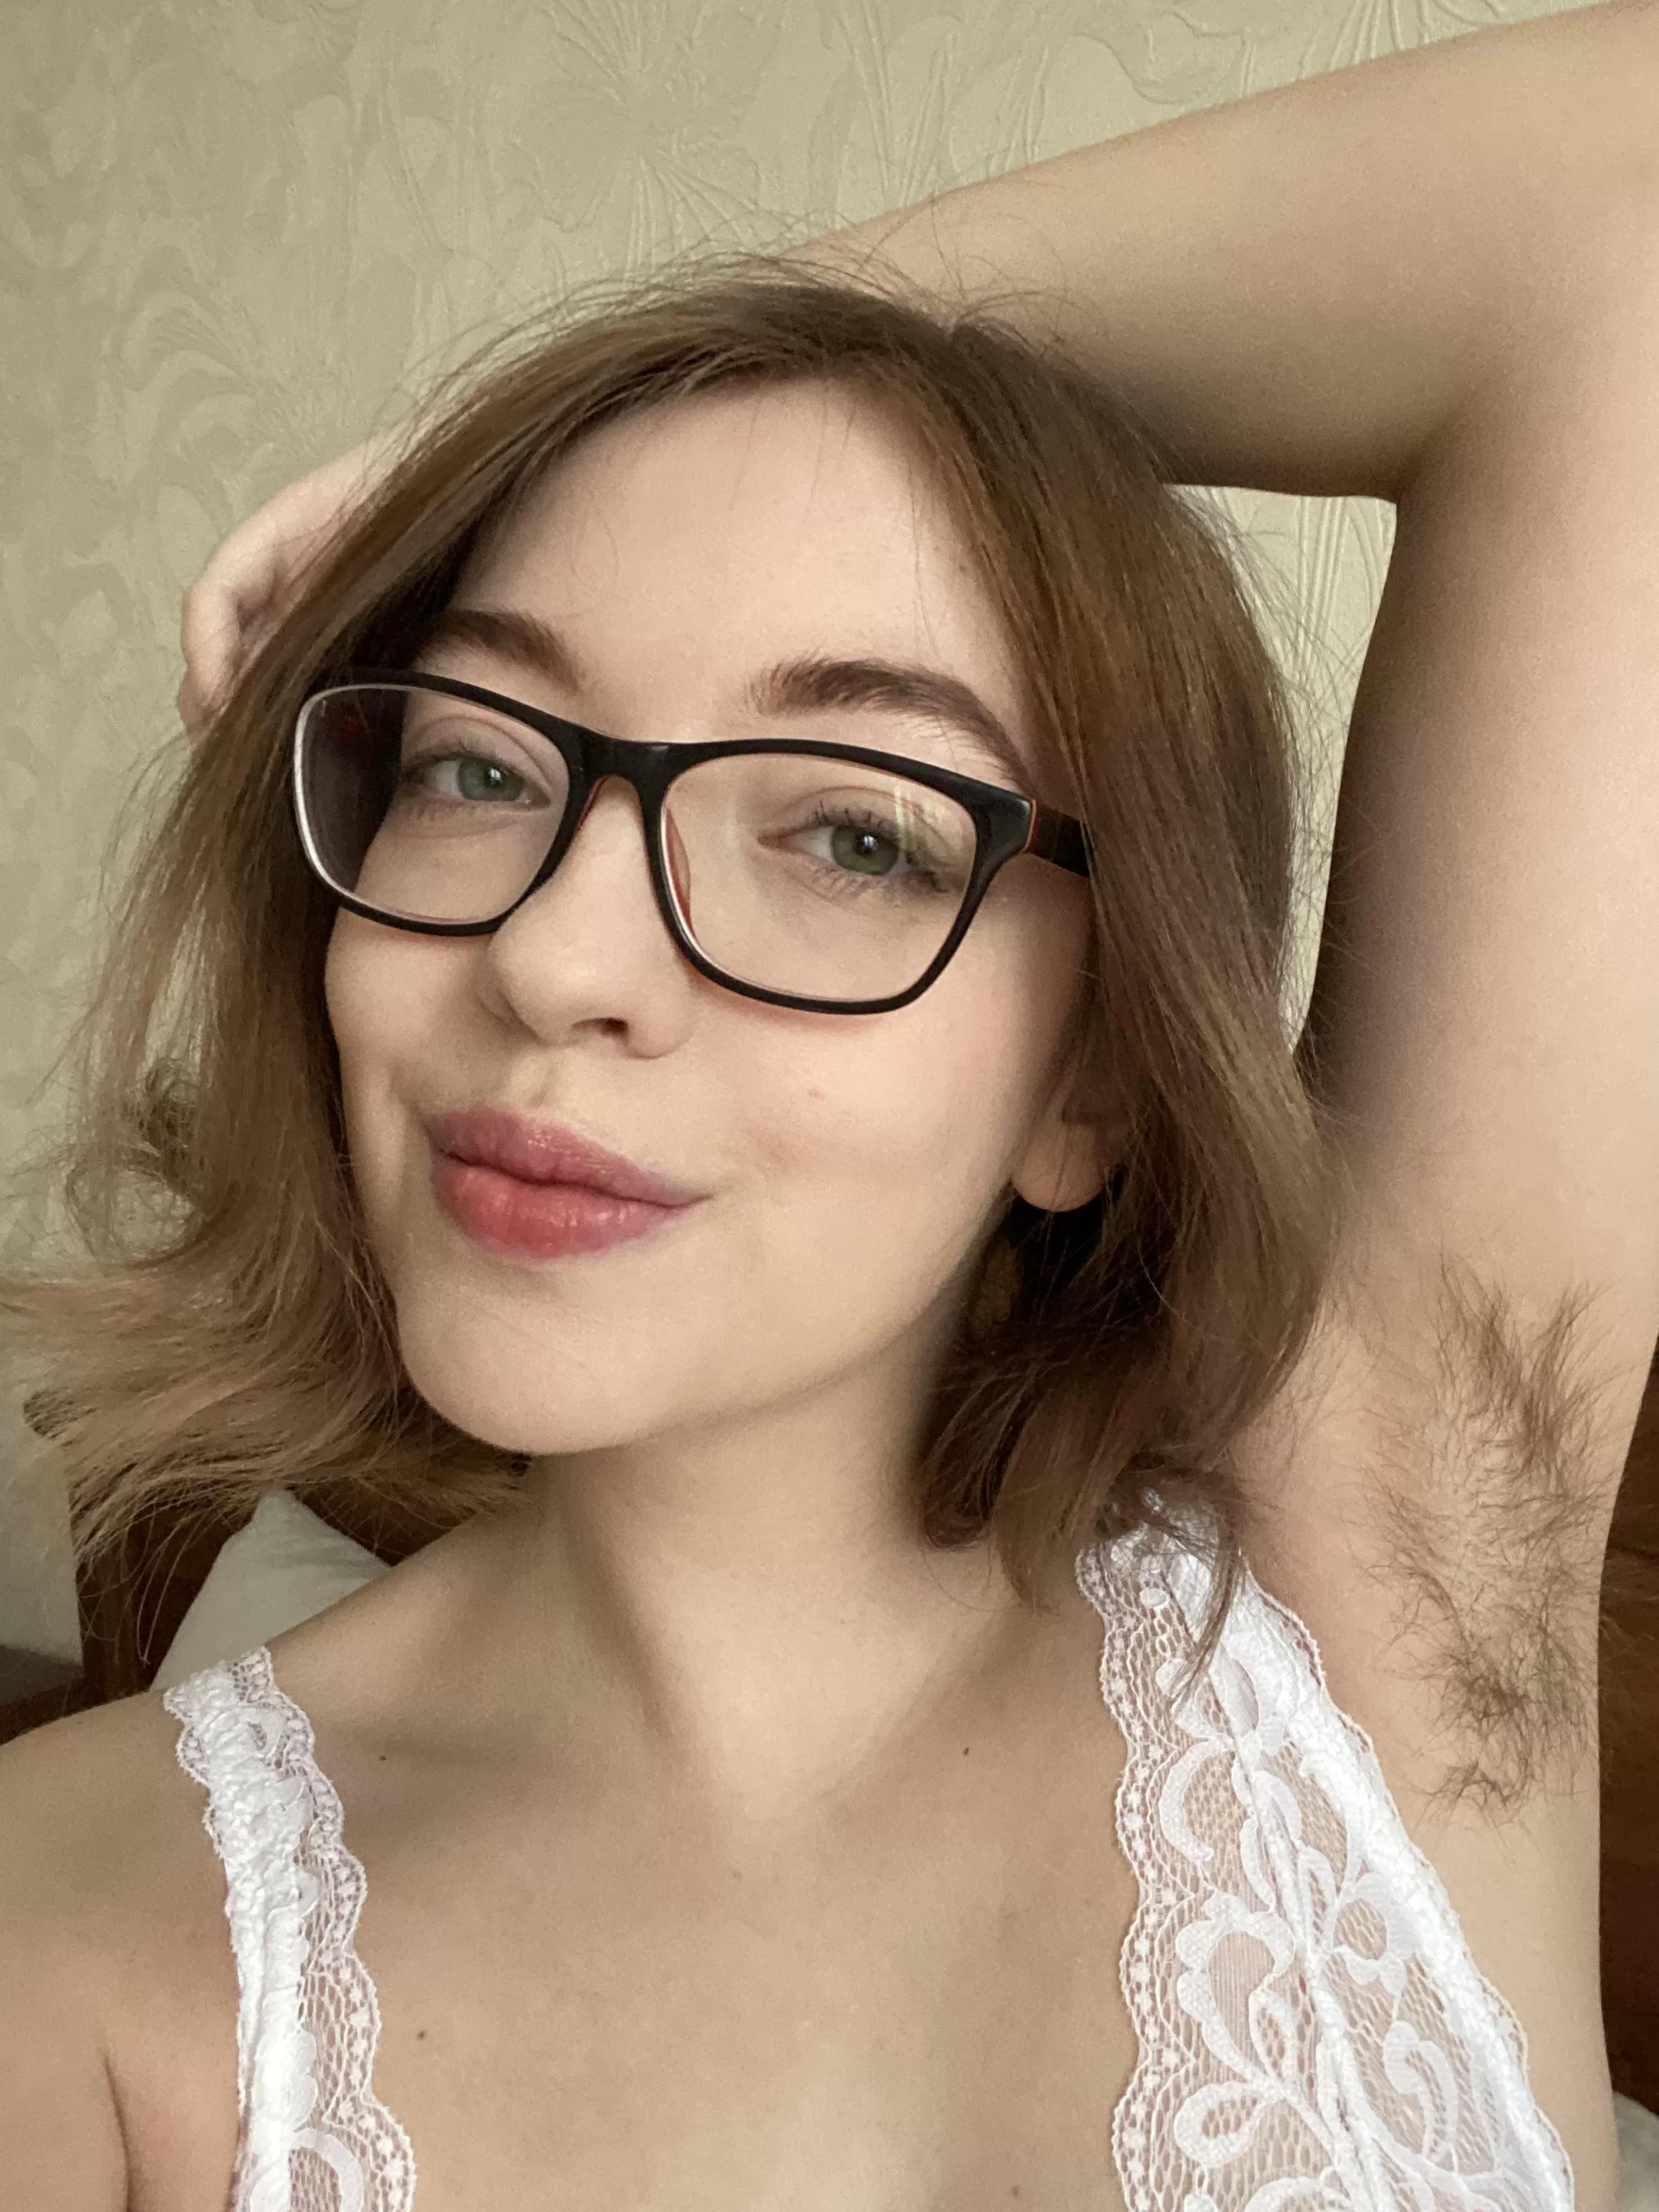 hairy armpit selfie nude